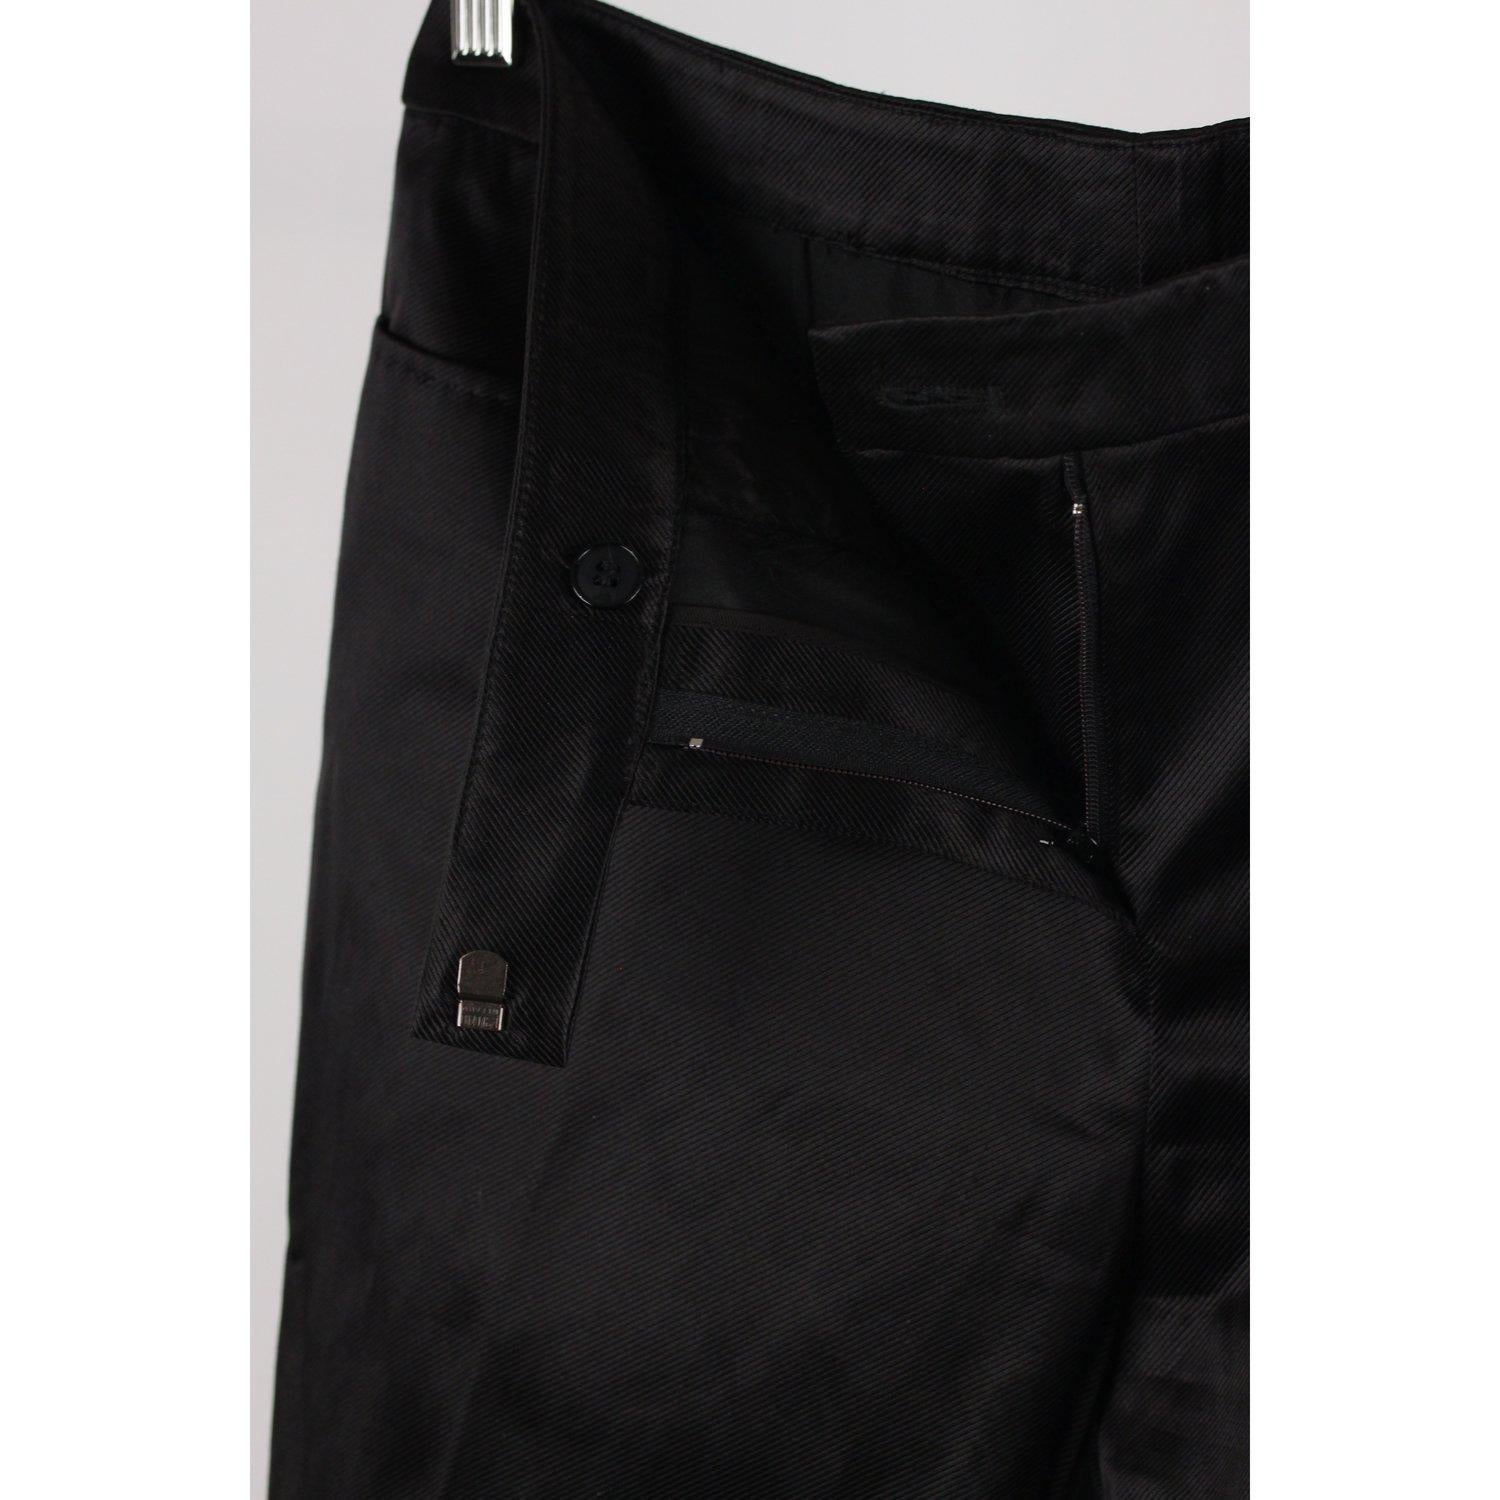 Black Alexander McQueen Classic Trousers Pants Size 40